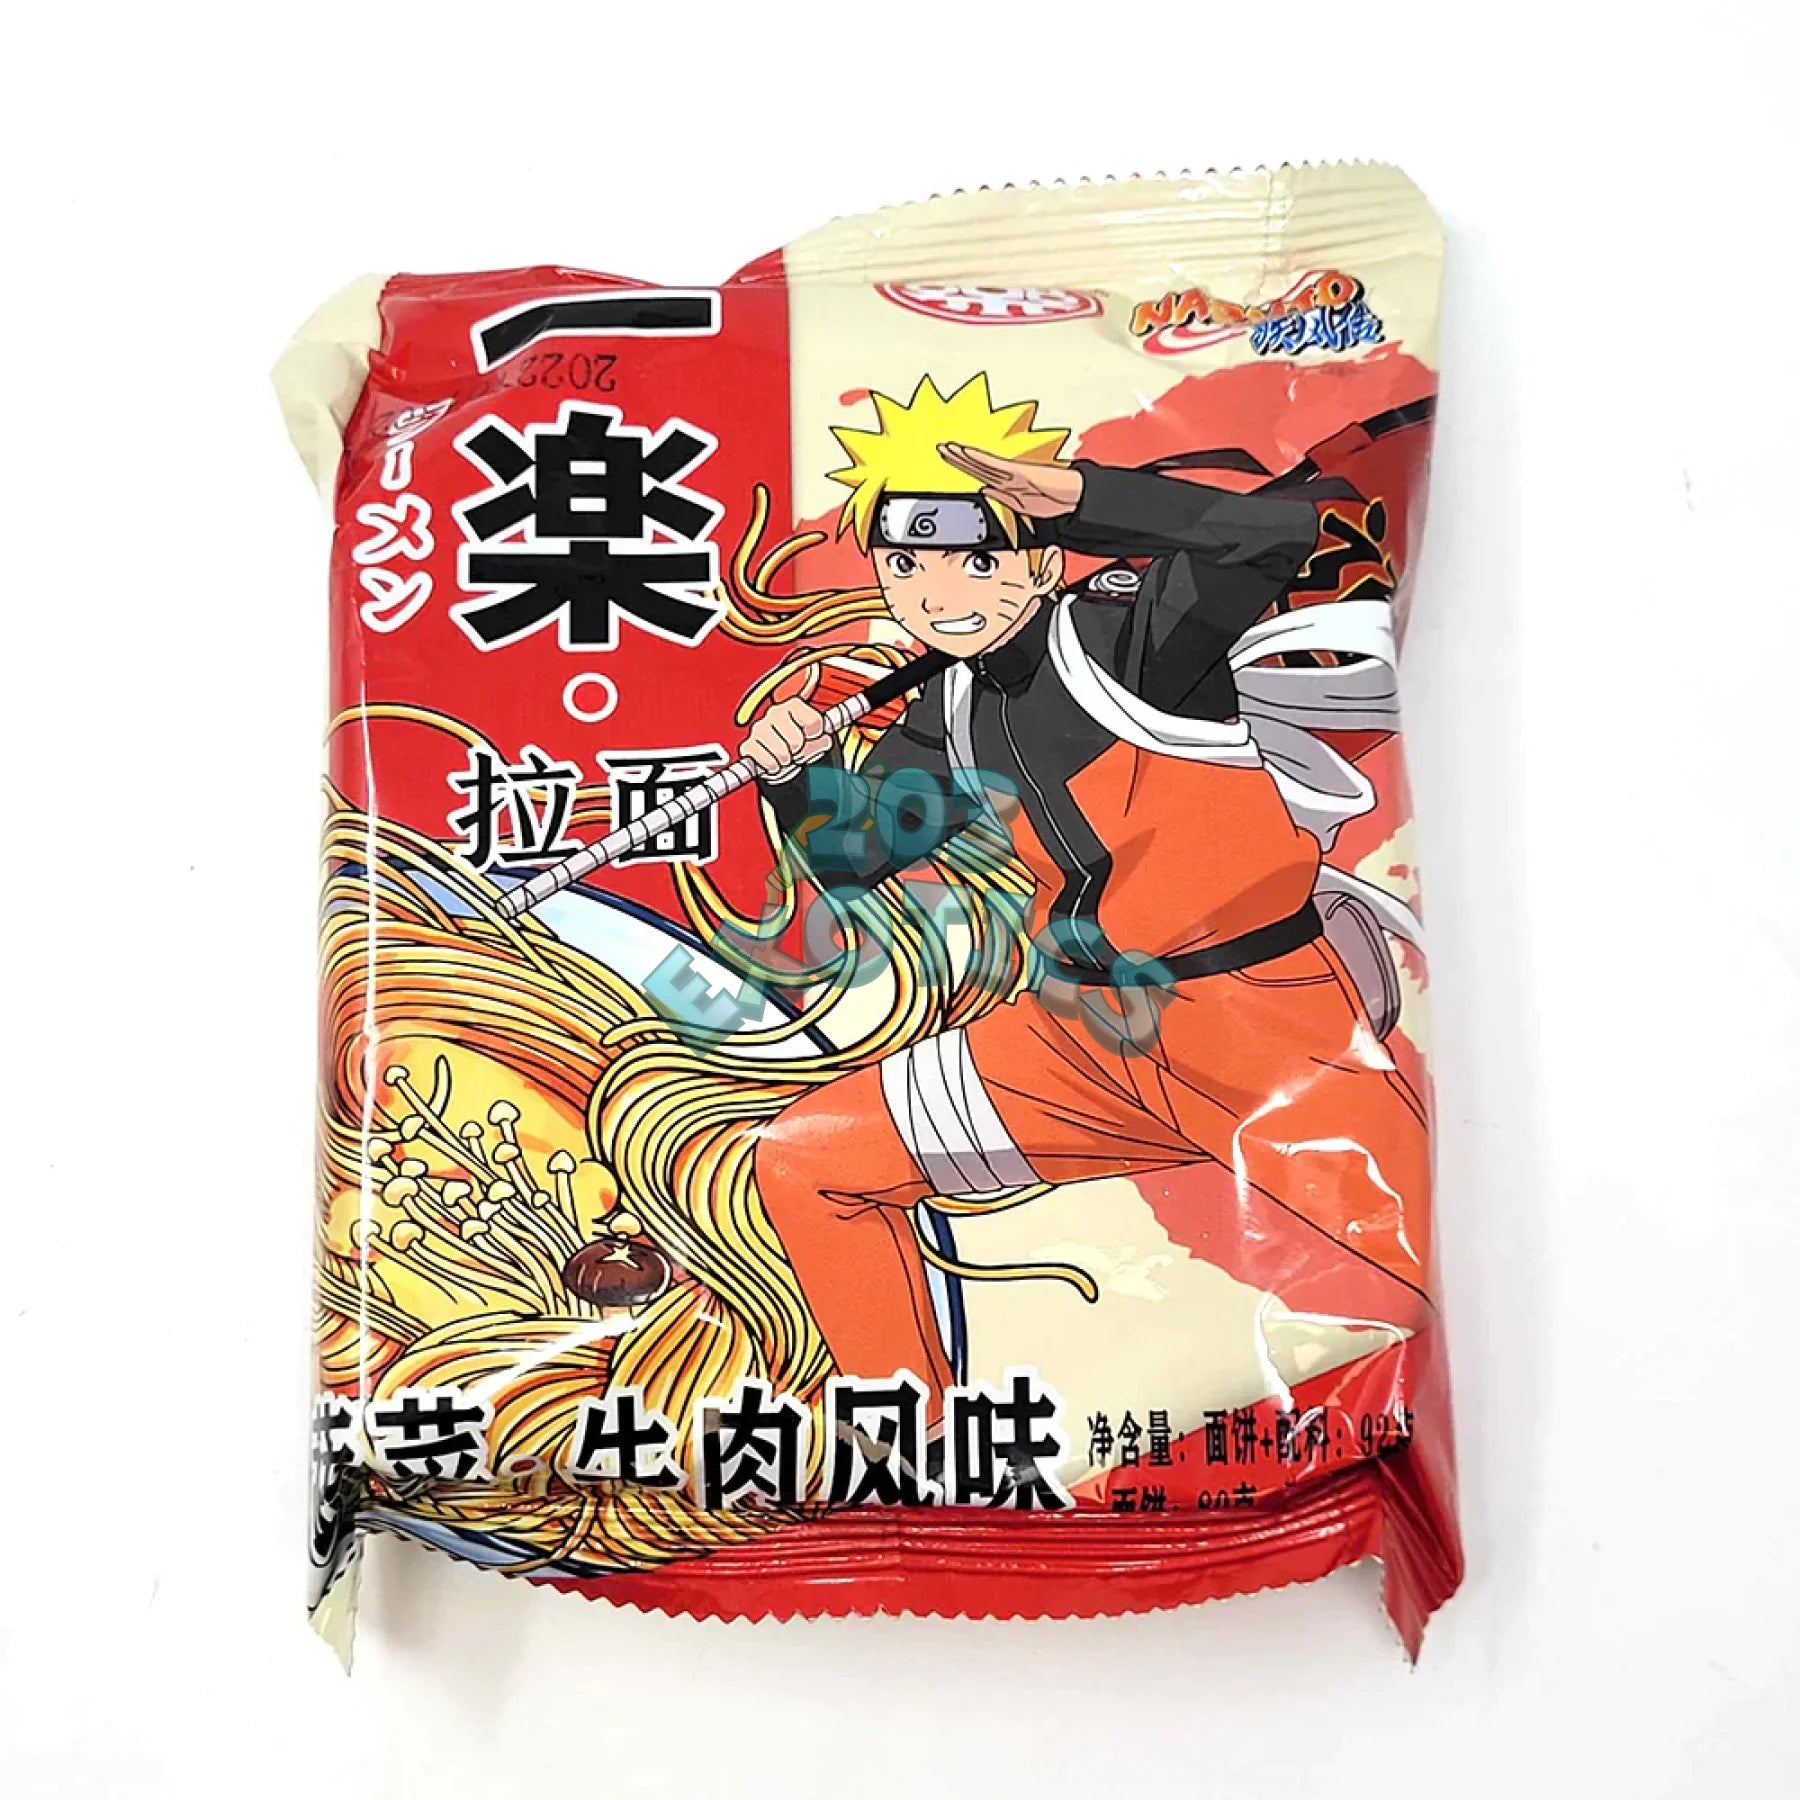 Naruto Beef Flavored Ramen (China)